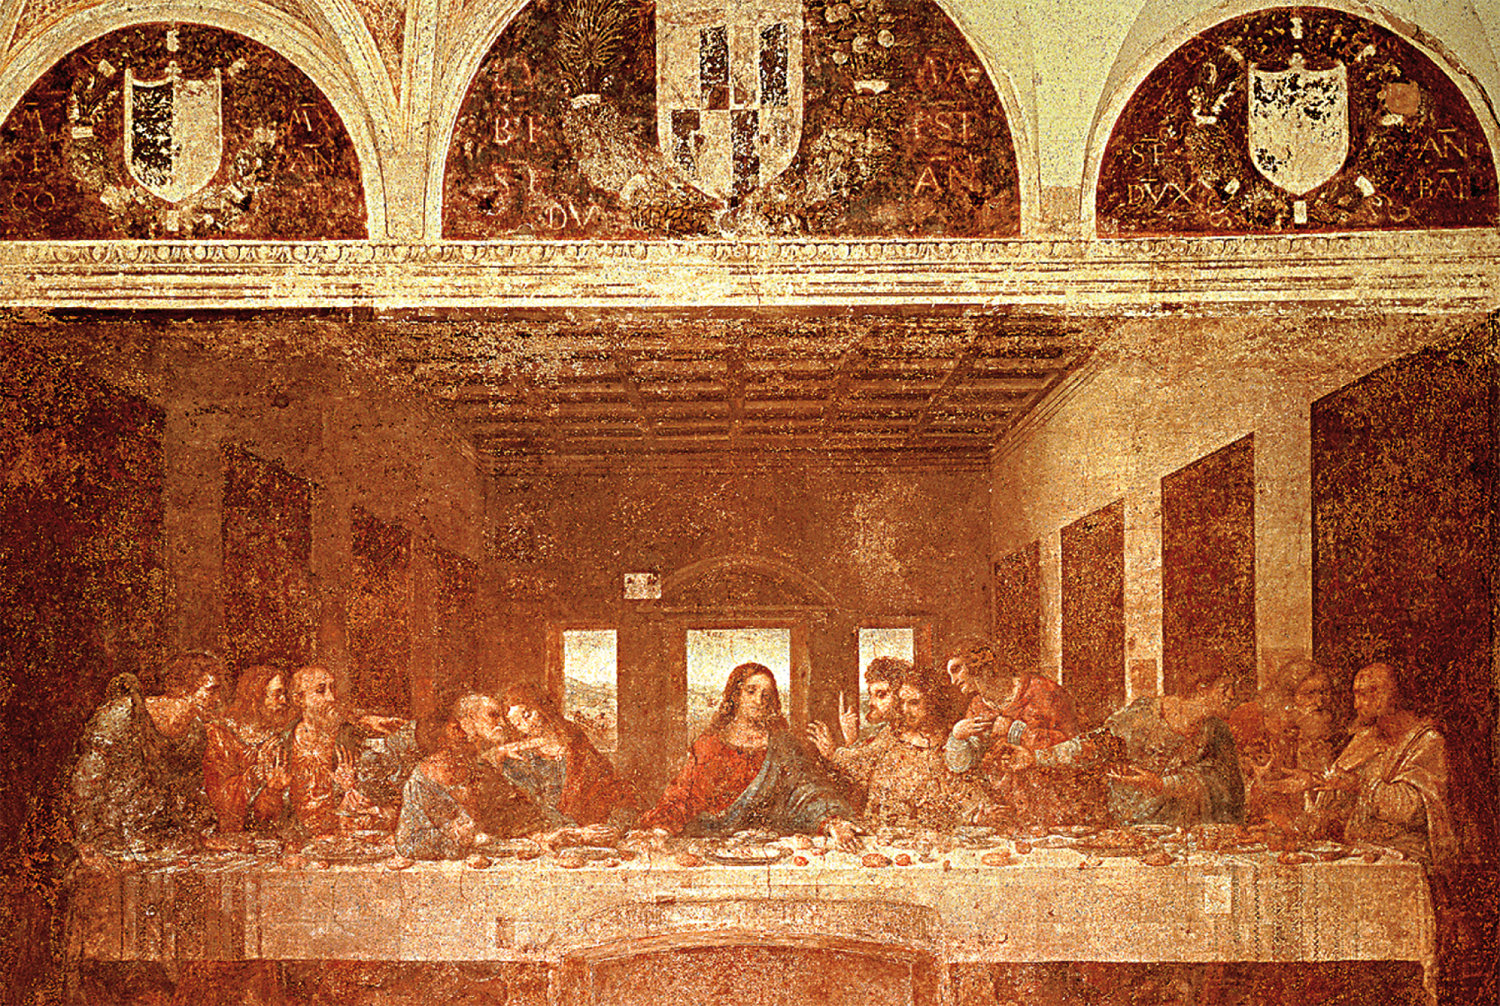 Detail from The Last Supper Jigsaw Puzzle by Leonardo da Vinci